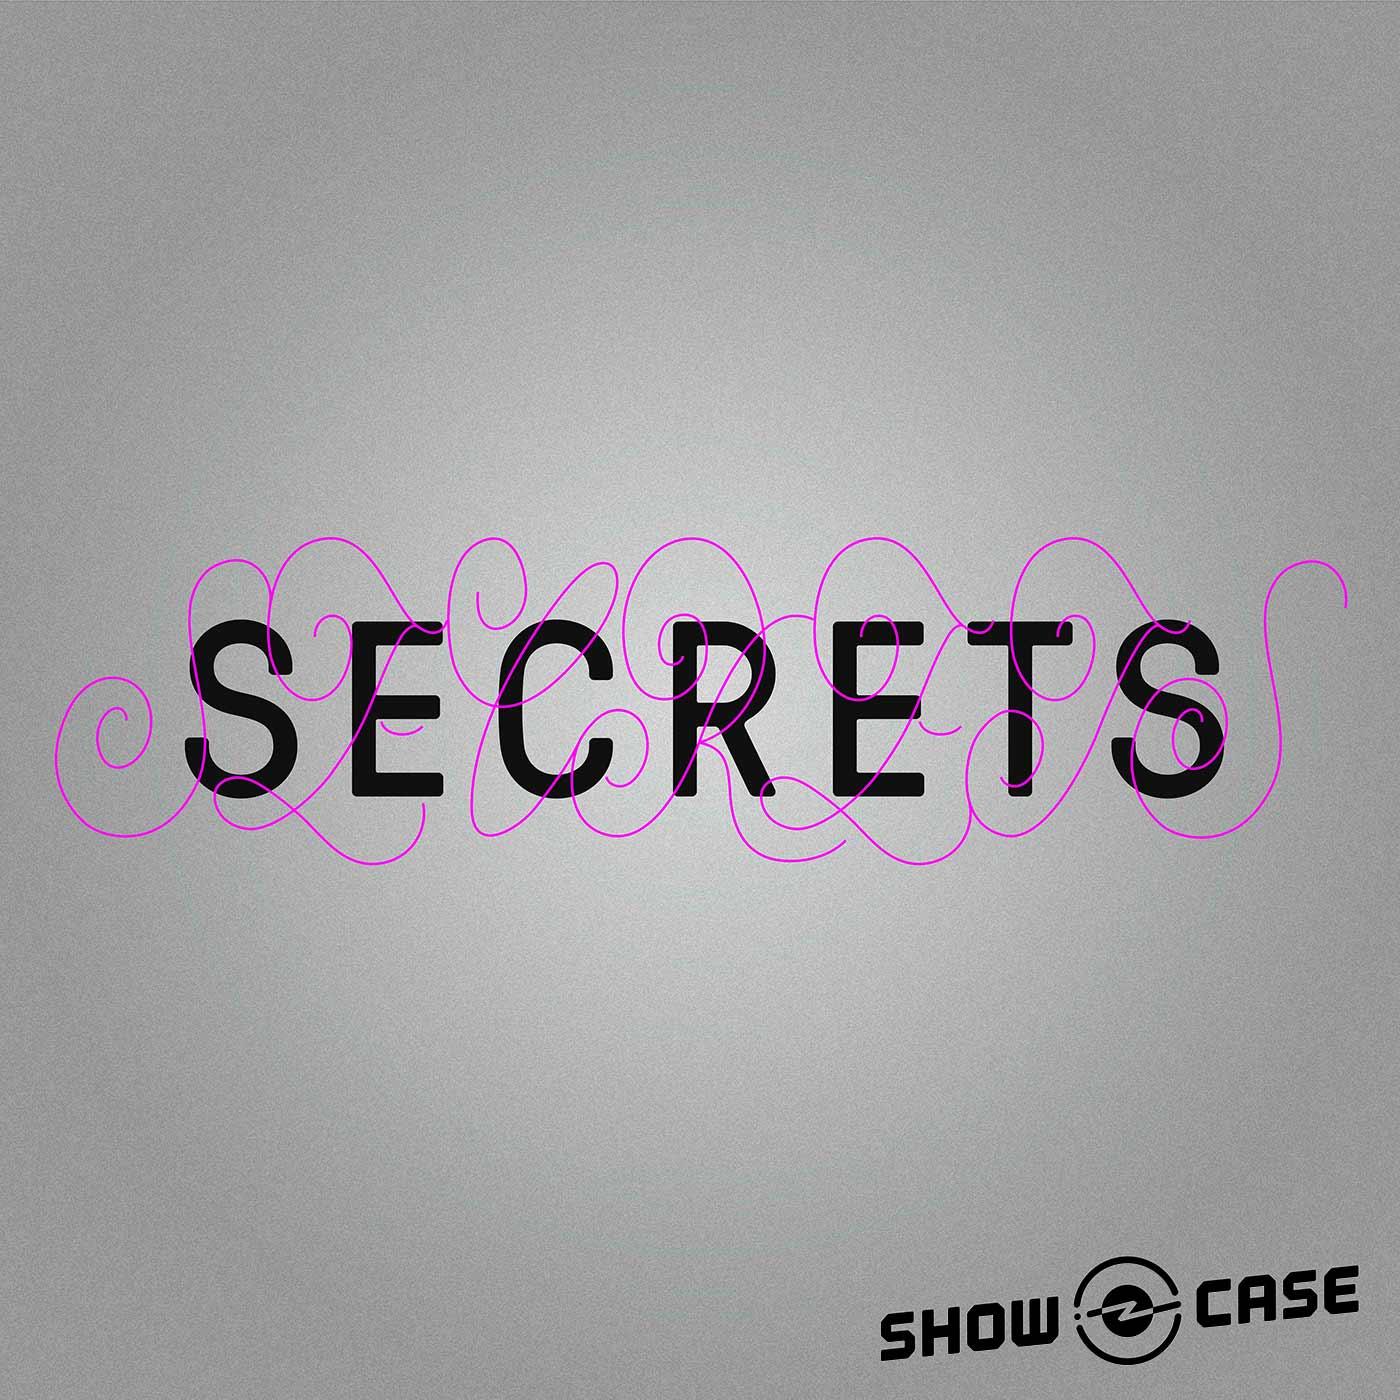 Thumbnail for "Secrets #5 – The Third Family".